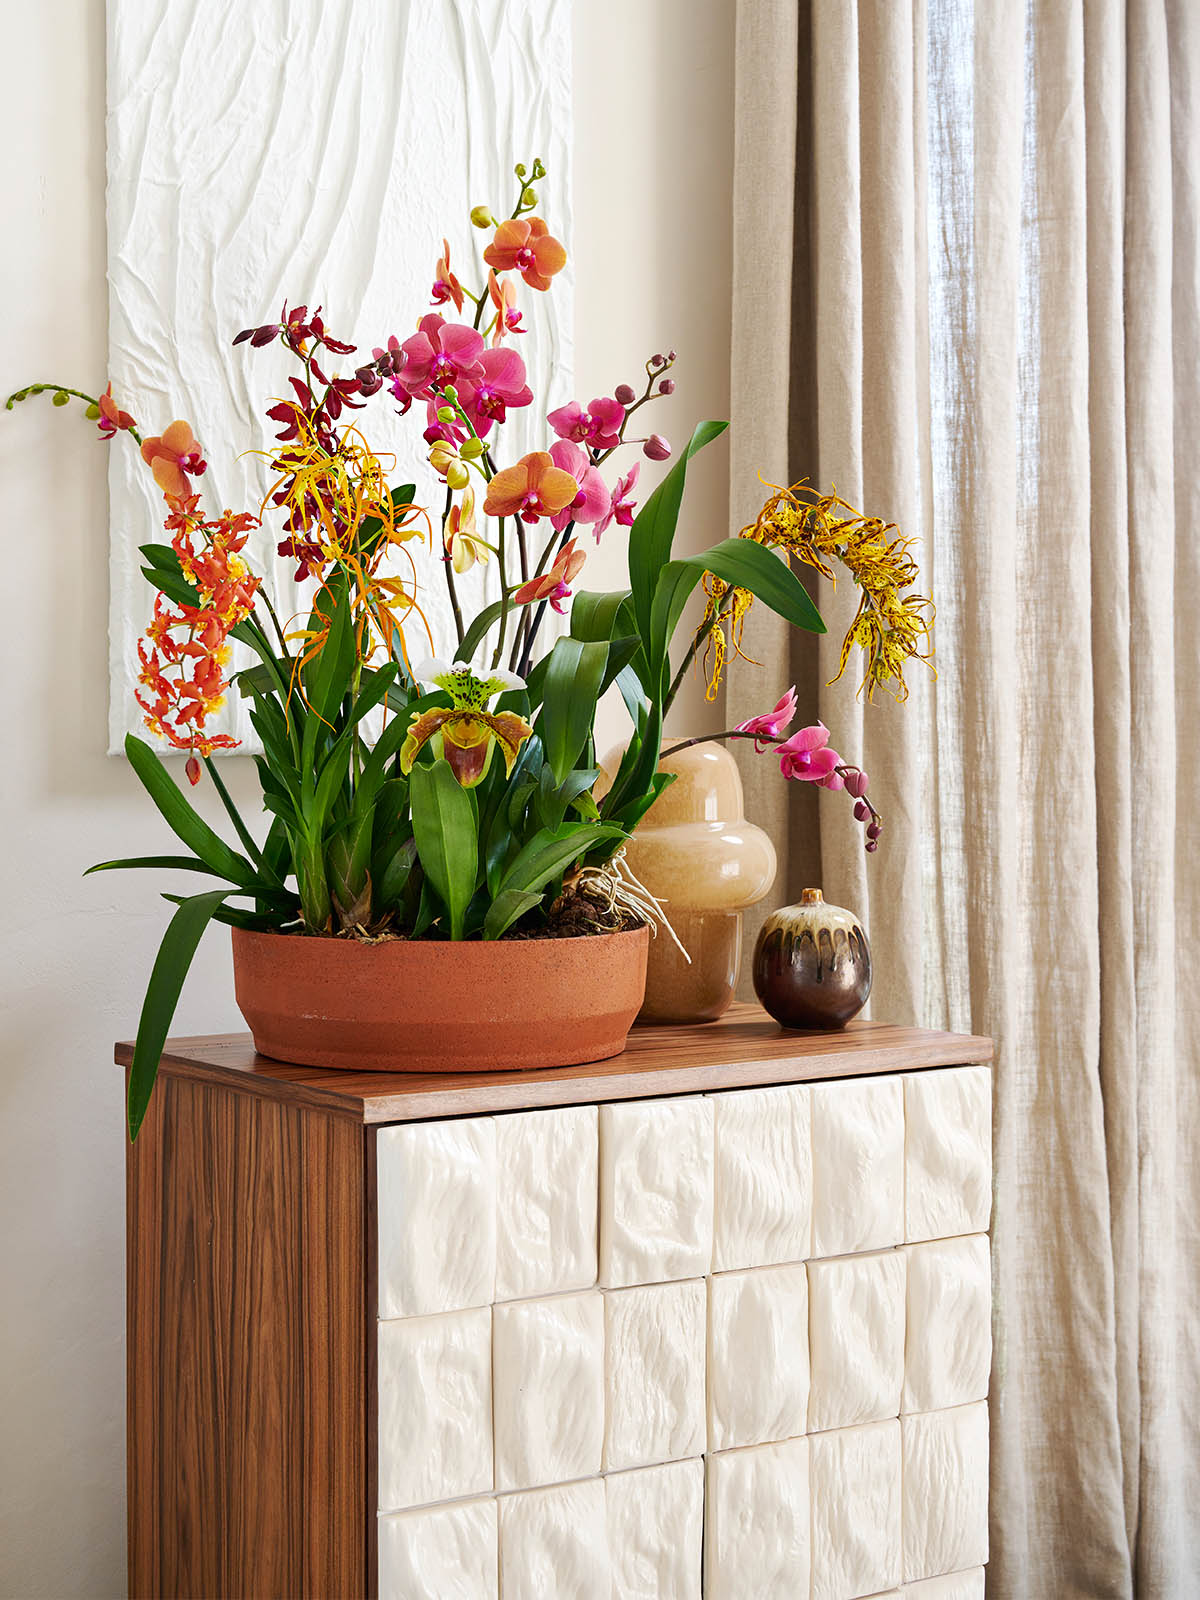 Orchids design by Jeannette Philippo on Thursd